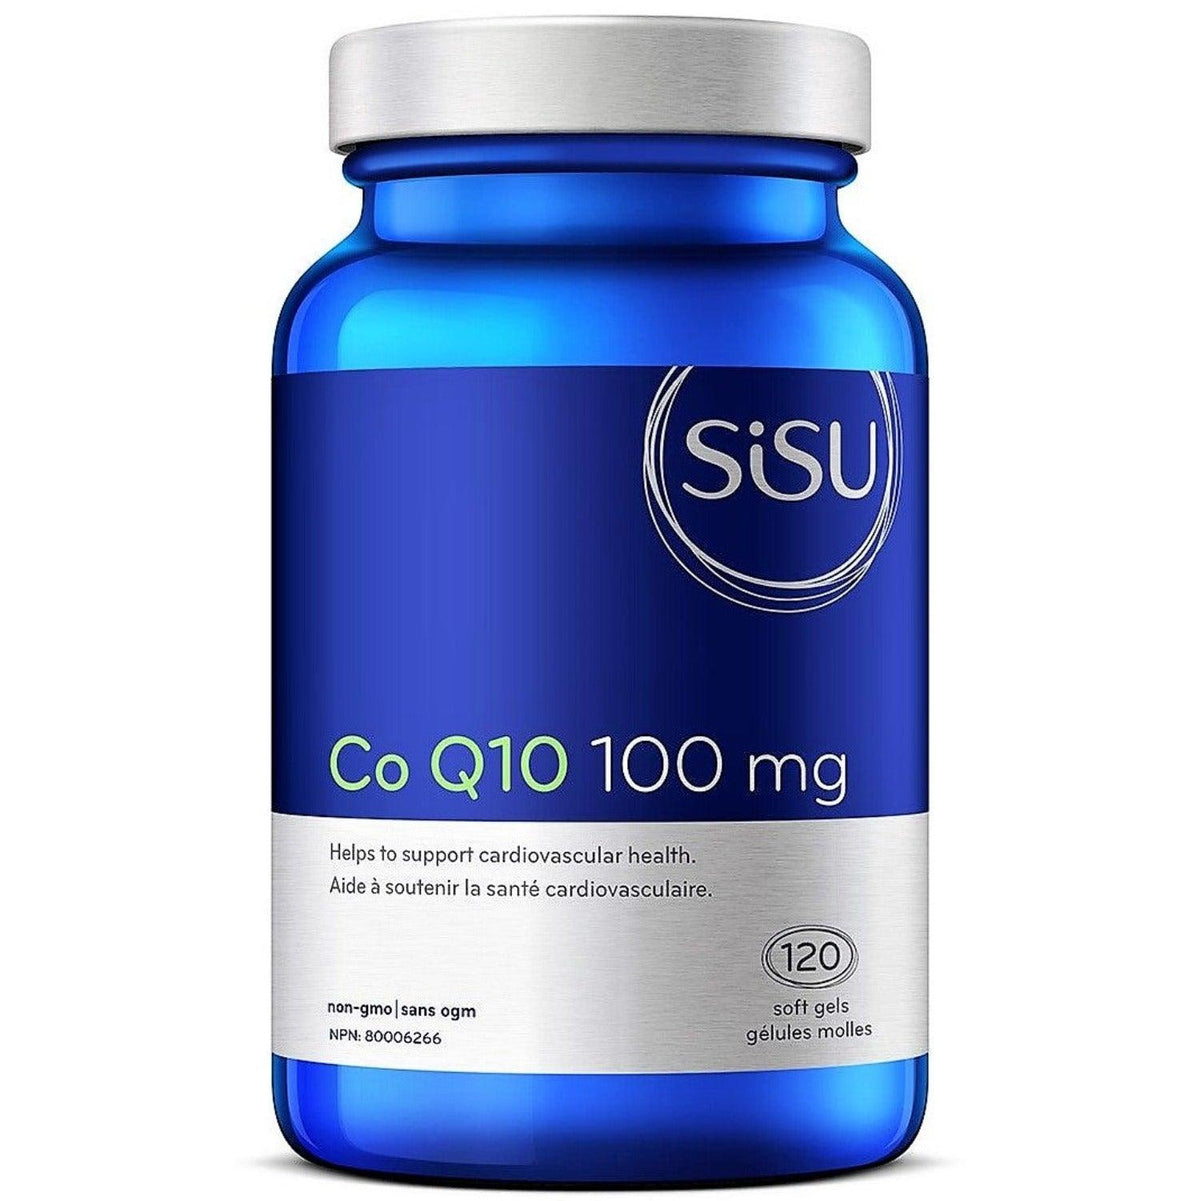 Sisu Co Q10 100mg 120 Softgels Supplements - Cardiovascular Health at Village Vitamin Store